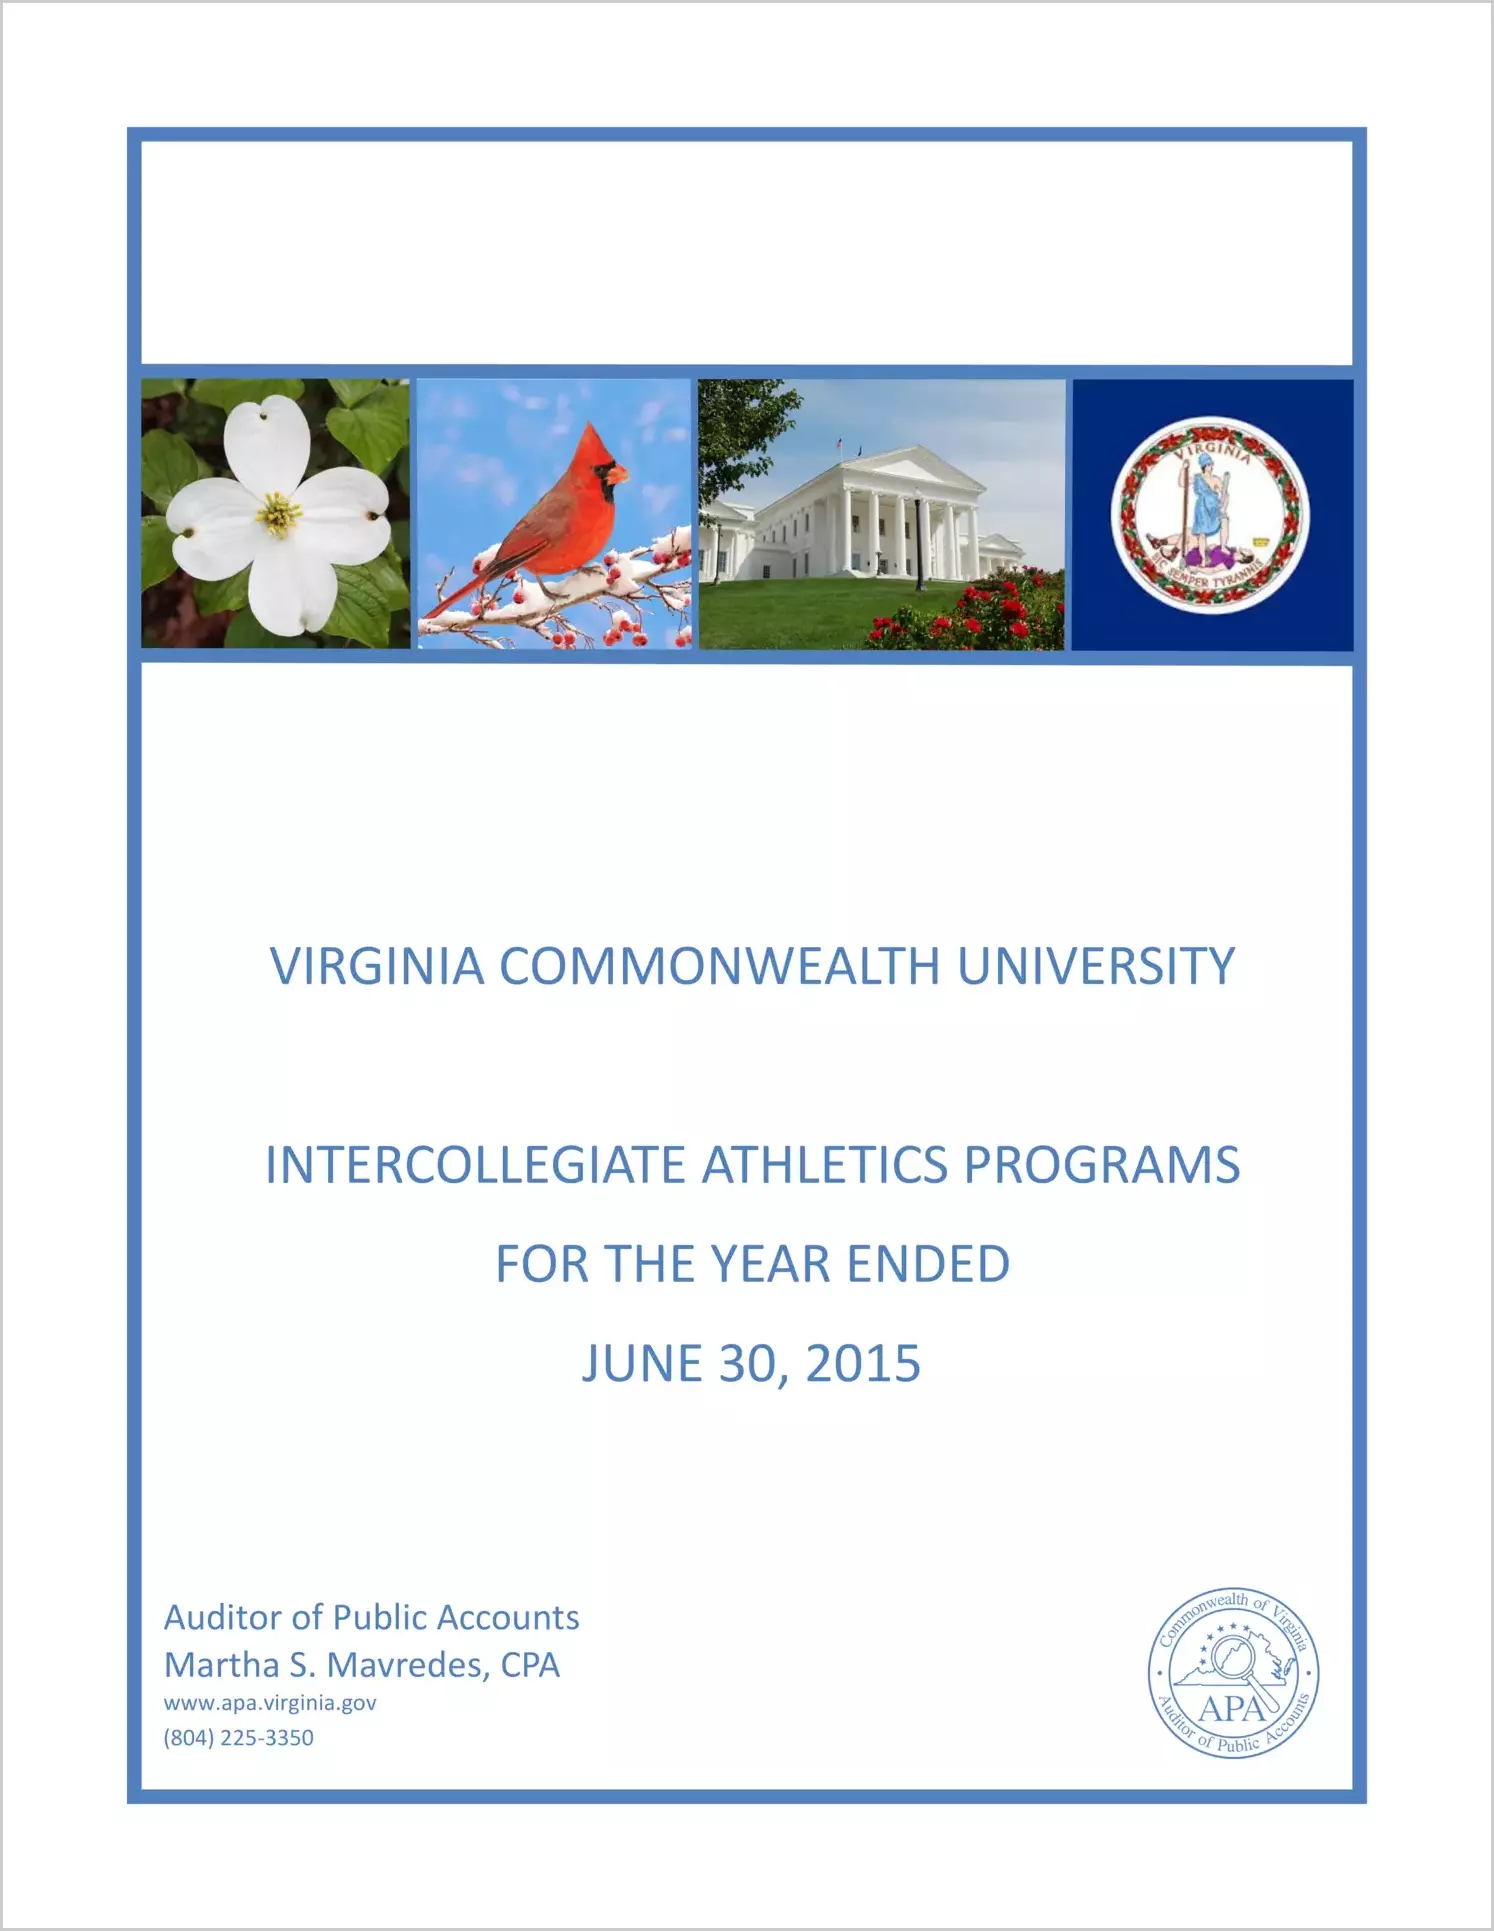 Virginia Commonwealth University Intercollegiate Athletics Programs for the year ended June 30, 2015